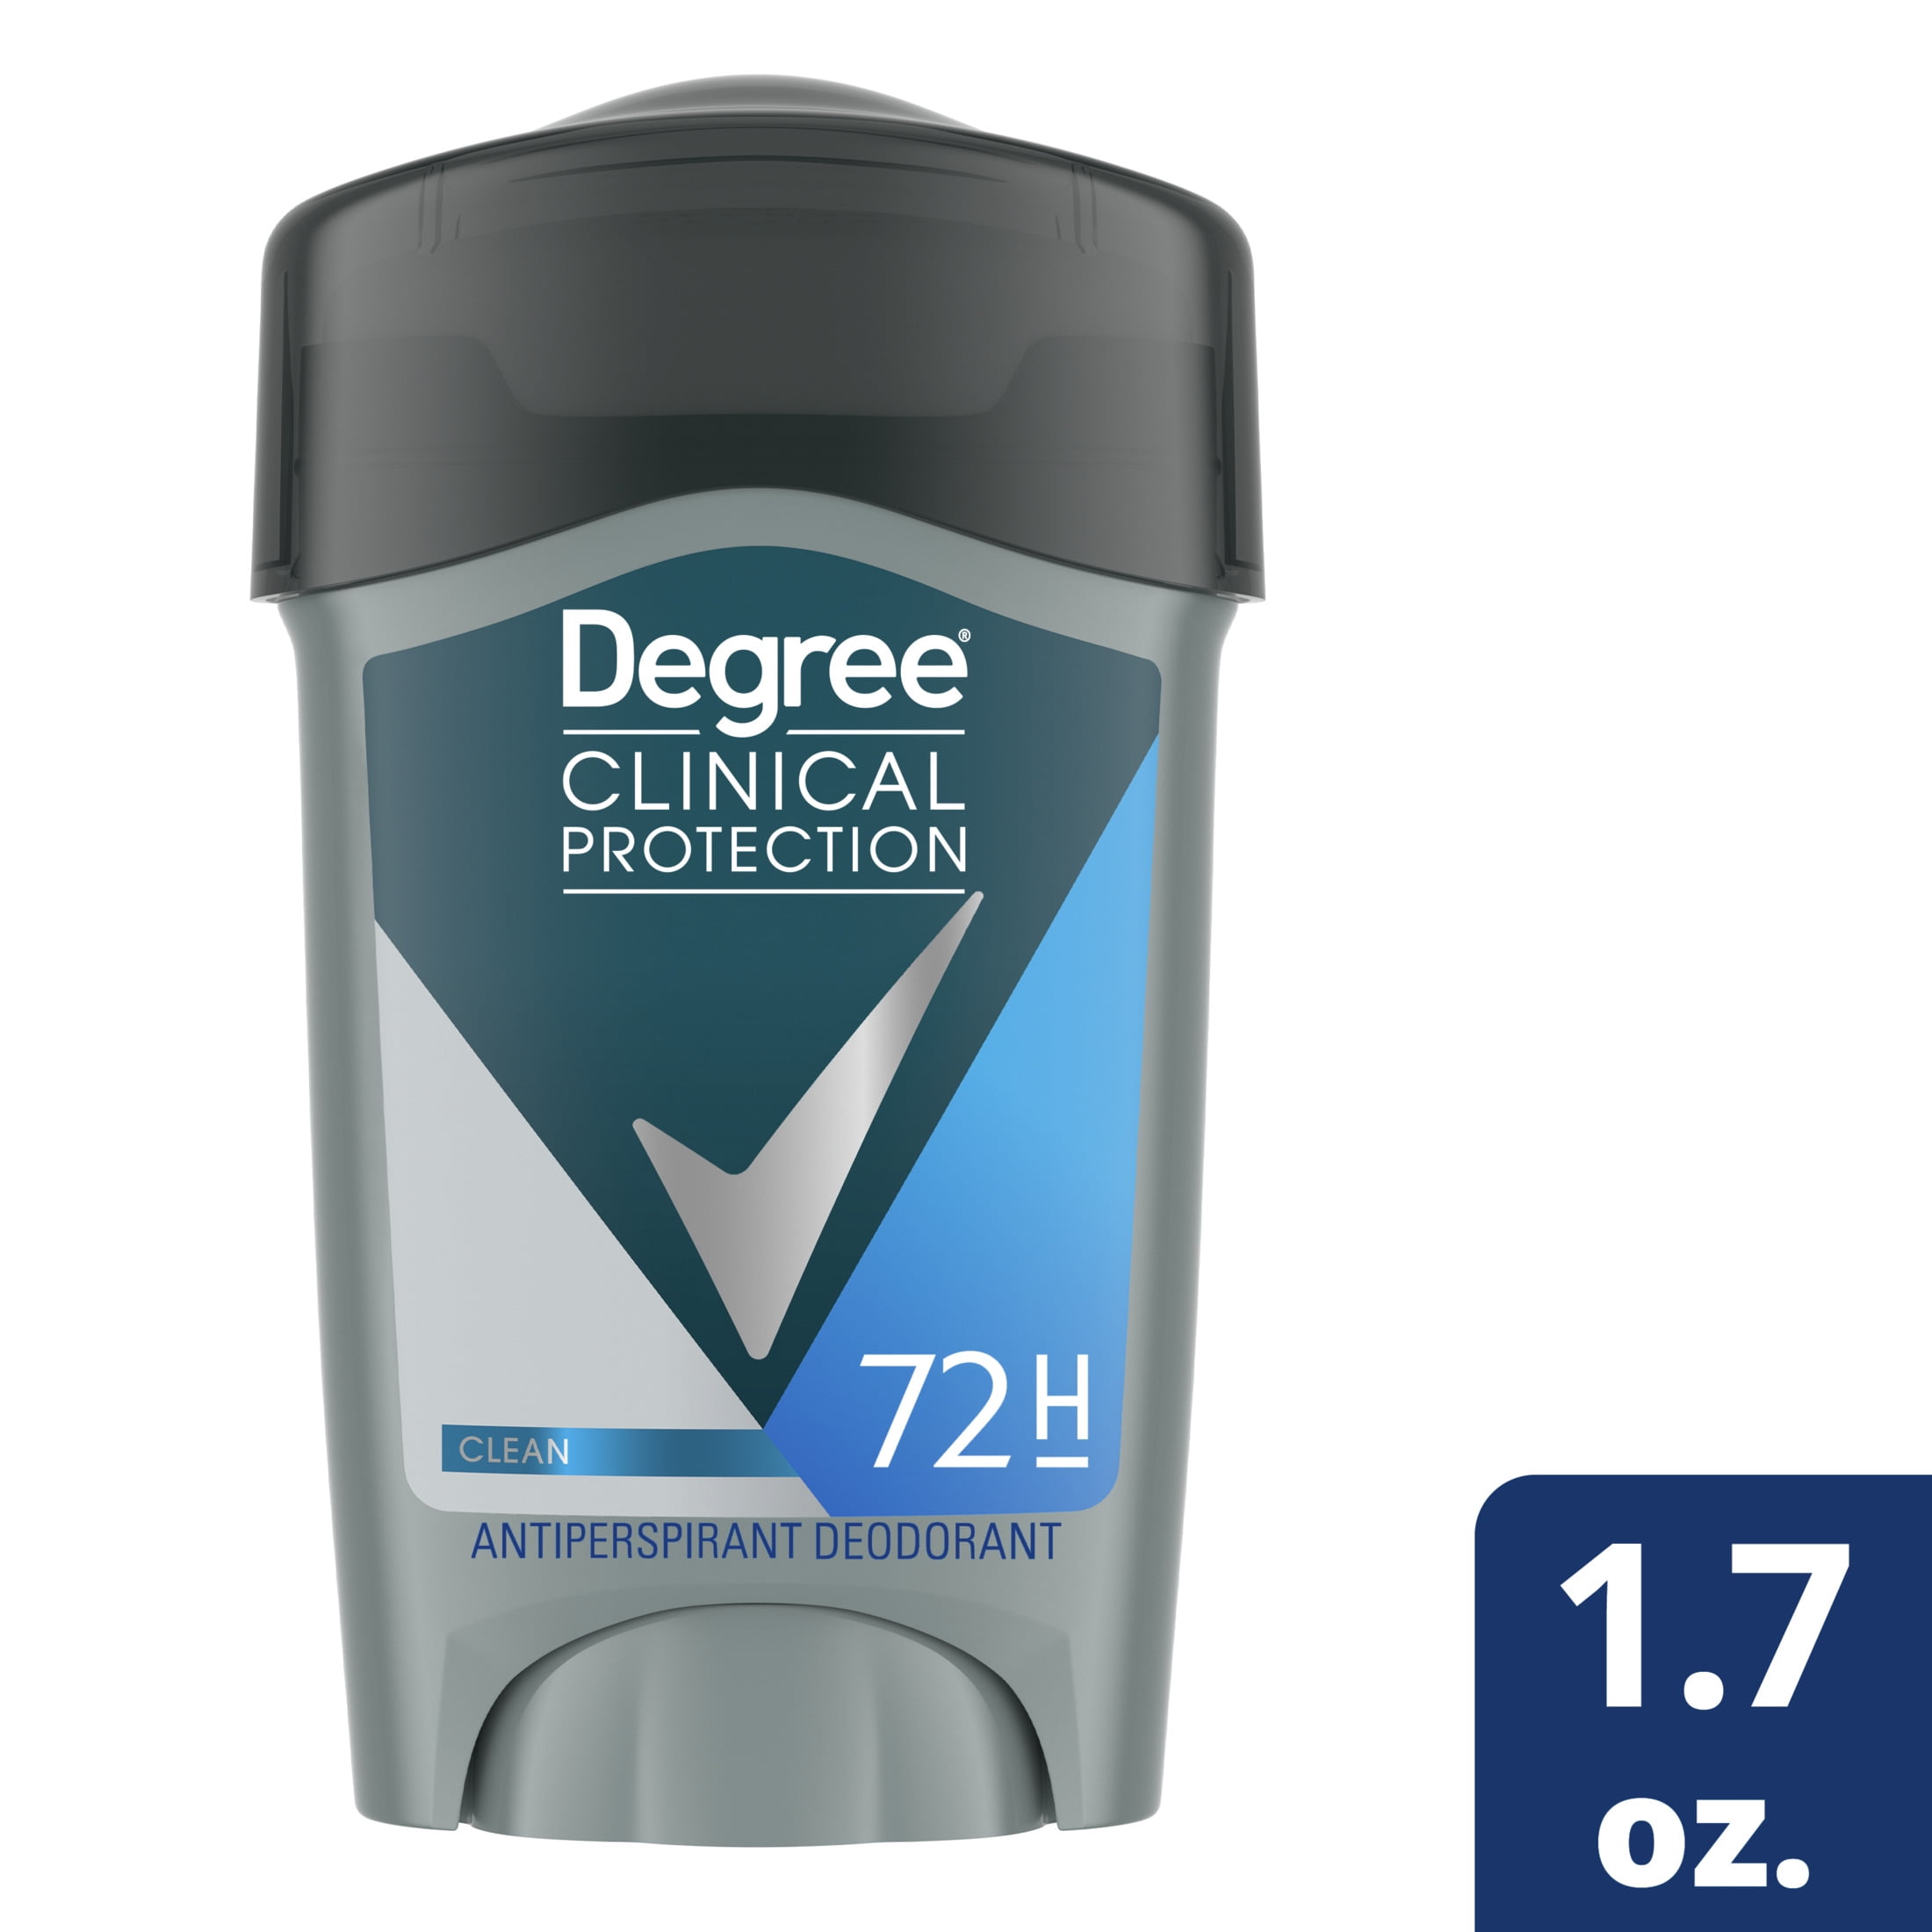 Degree Men 72H Antiperspirant Deodorant Clean with MotionSense, 1.7 oz